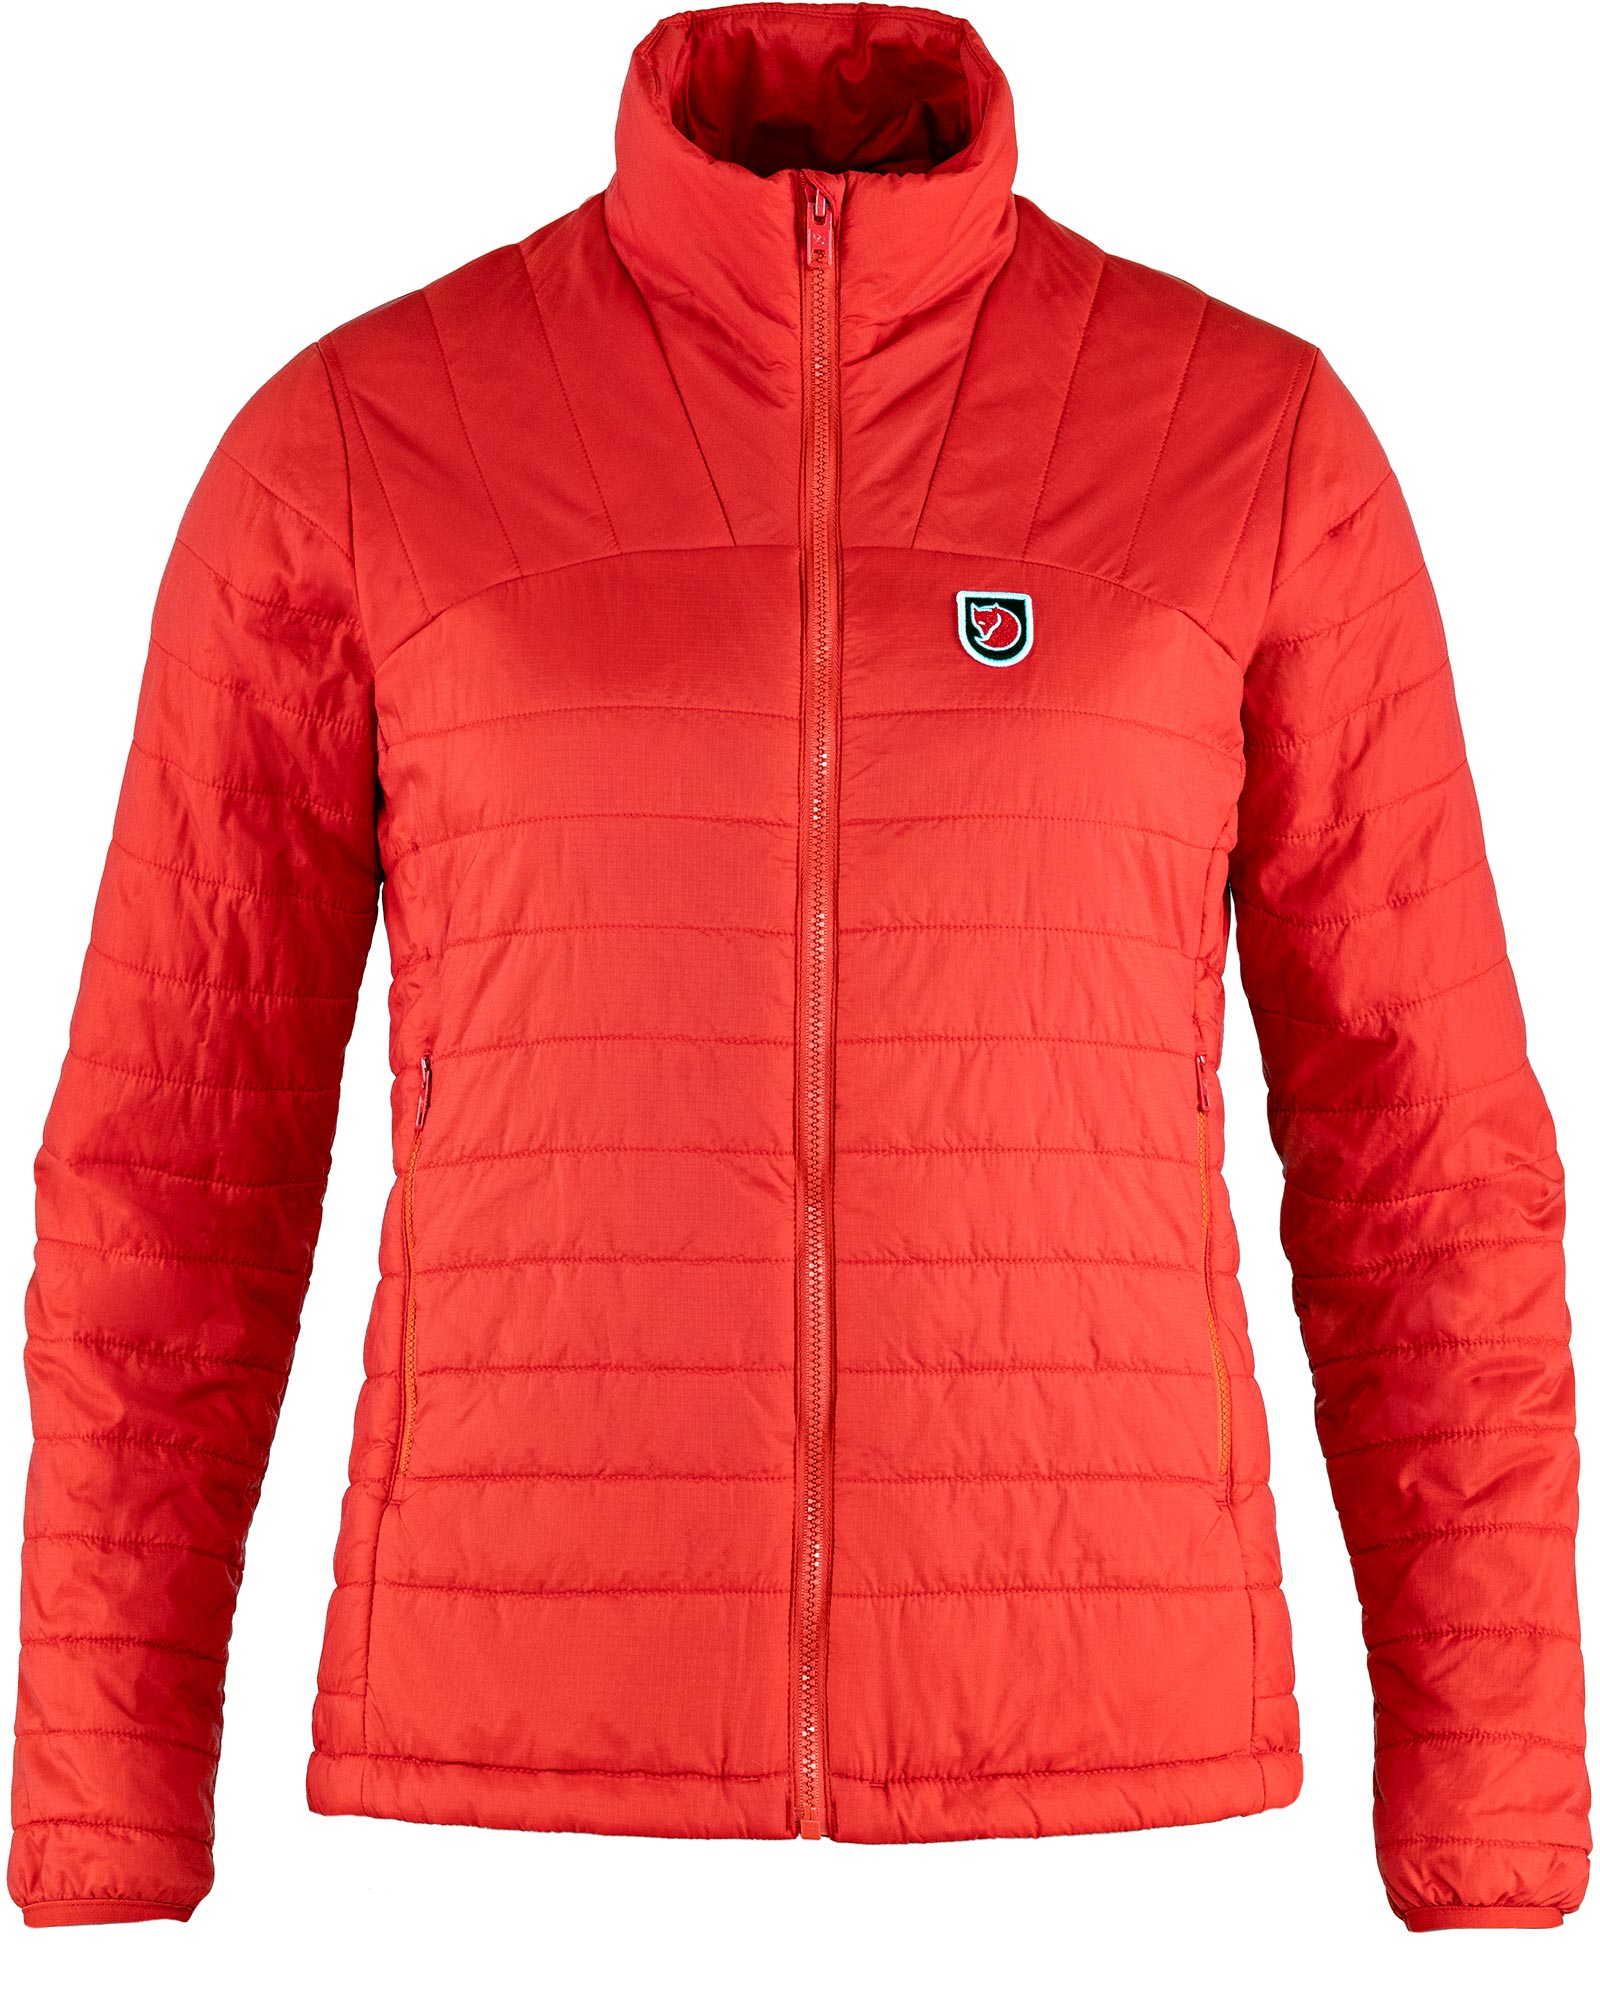 Fjallraven Expedition Latt Women’s Insulated Jacket - True Red S